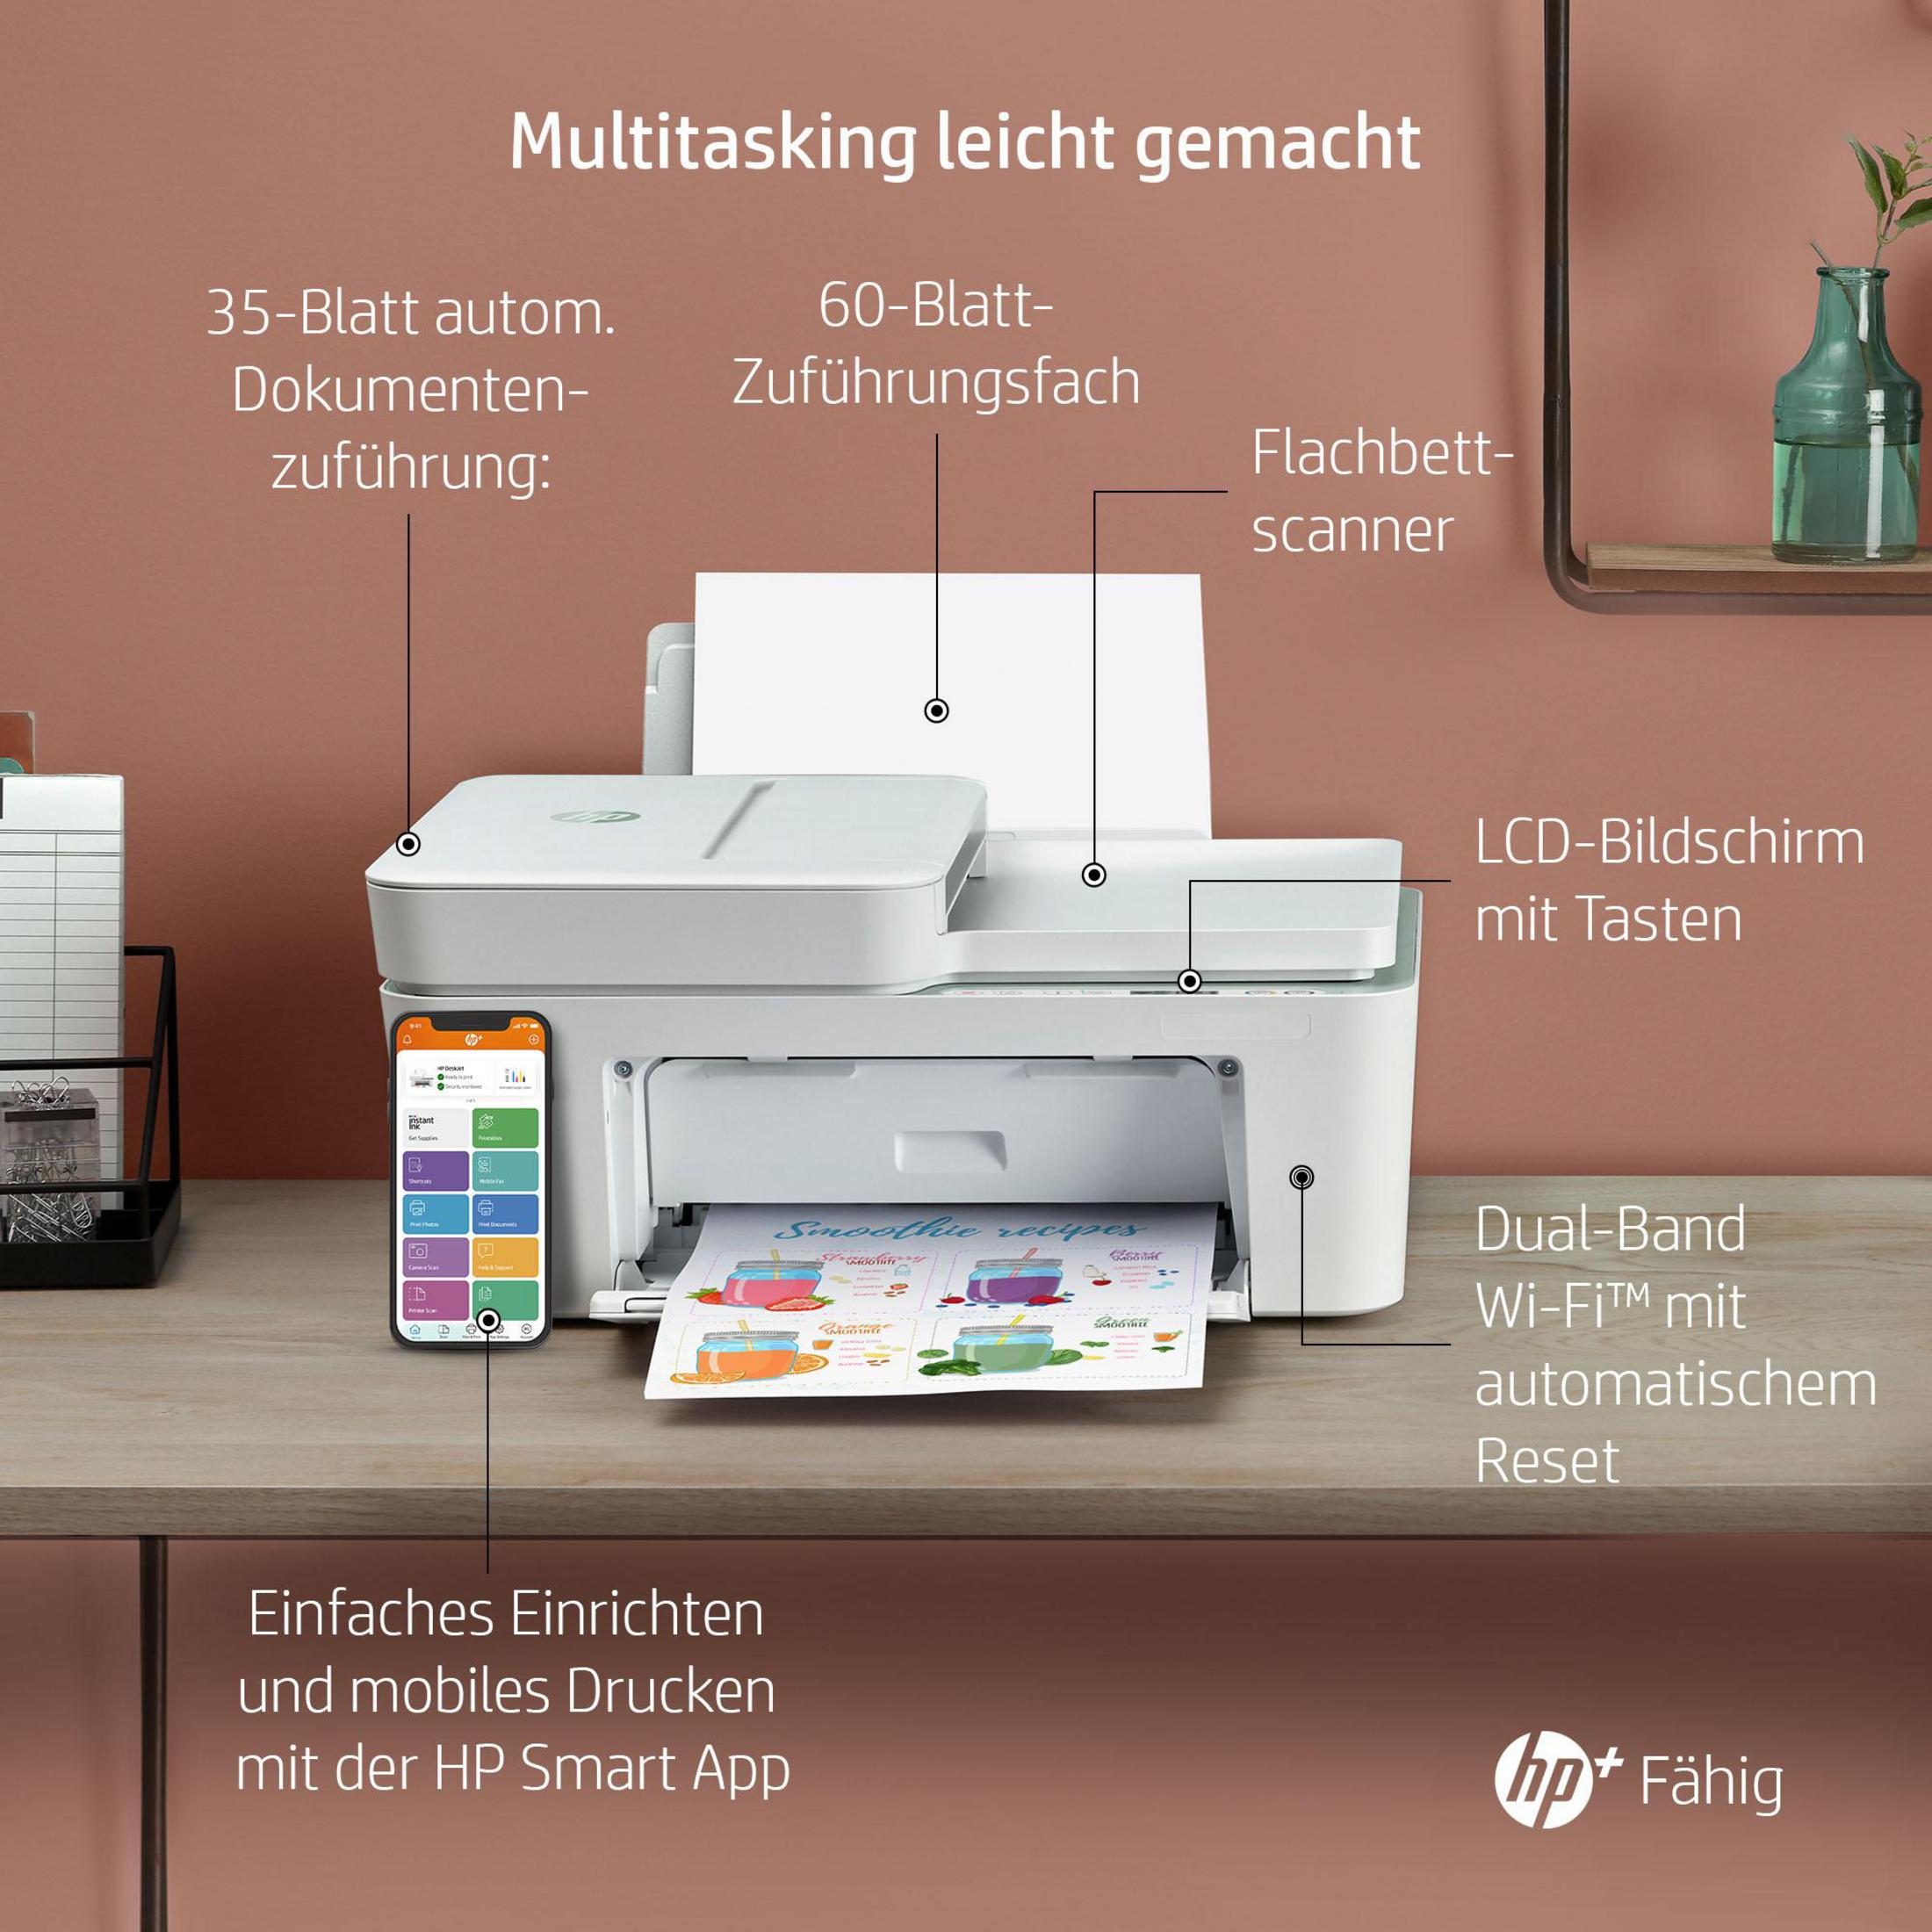 HP DeskJet 4122e All-in-One und Drucker Tinte WLAN Printer Multifunktionsgeräte